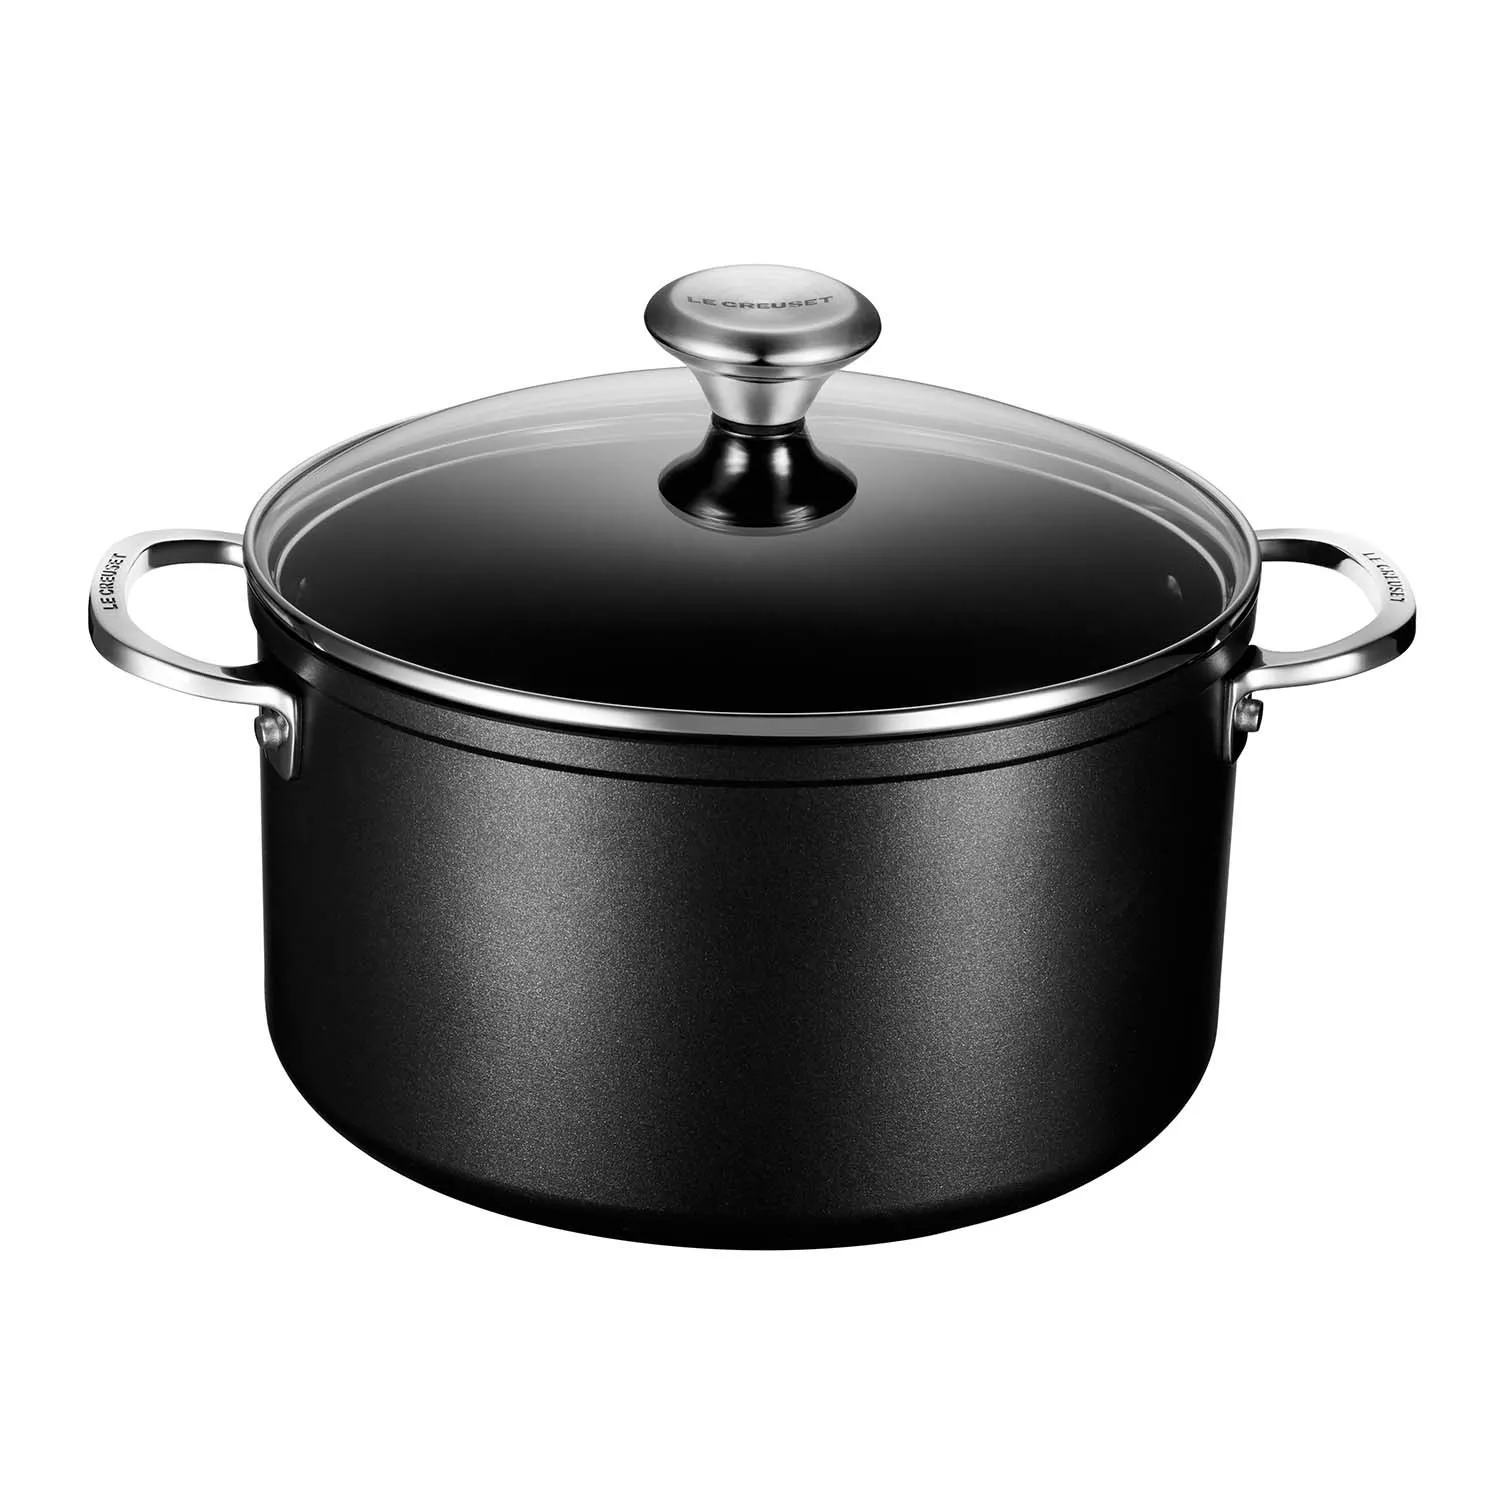 LEUGWAKN Stainless Steel Stock pot-6 Quart pot-Stockpots with Lid-Soup  Pot-Induction Pot-Cookware Pot-Cooking Pot-Crock Pot